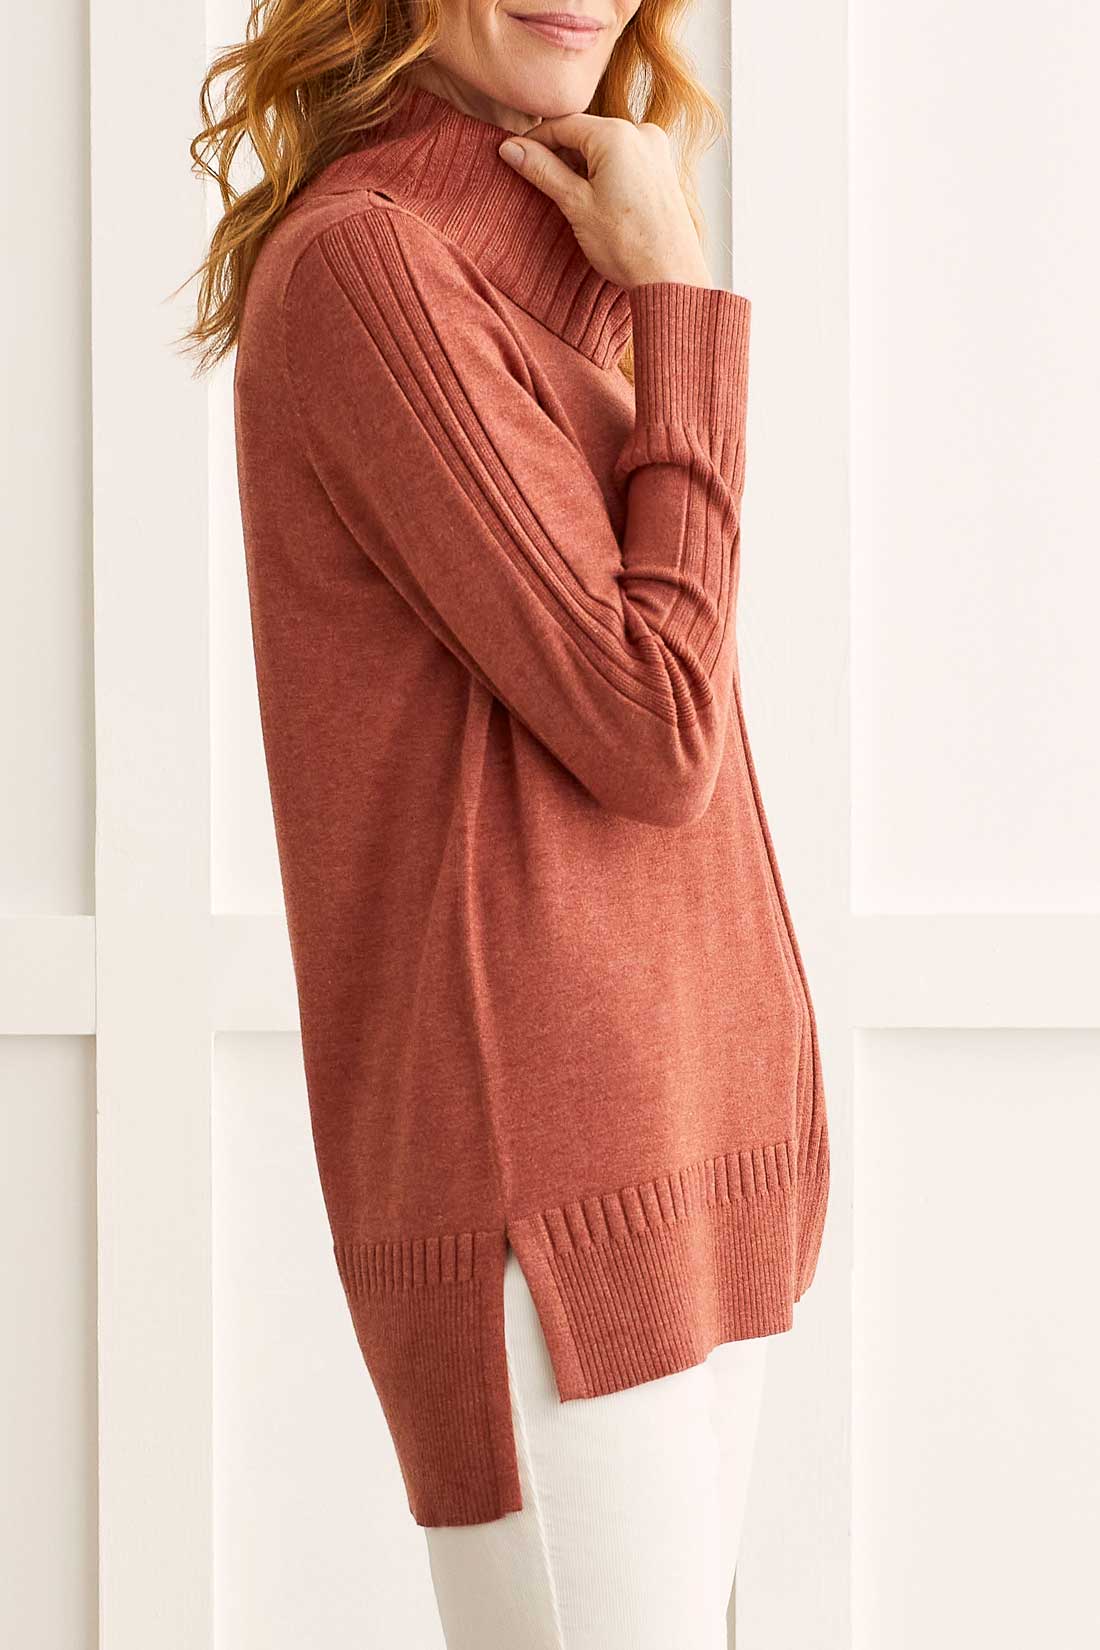 Cowl Neck Sweater - FINAL SALE